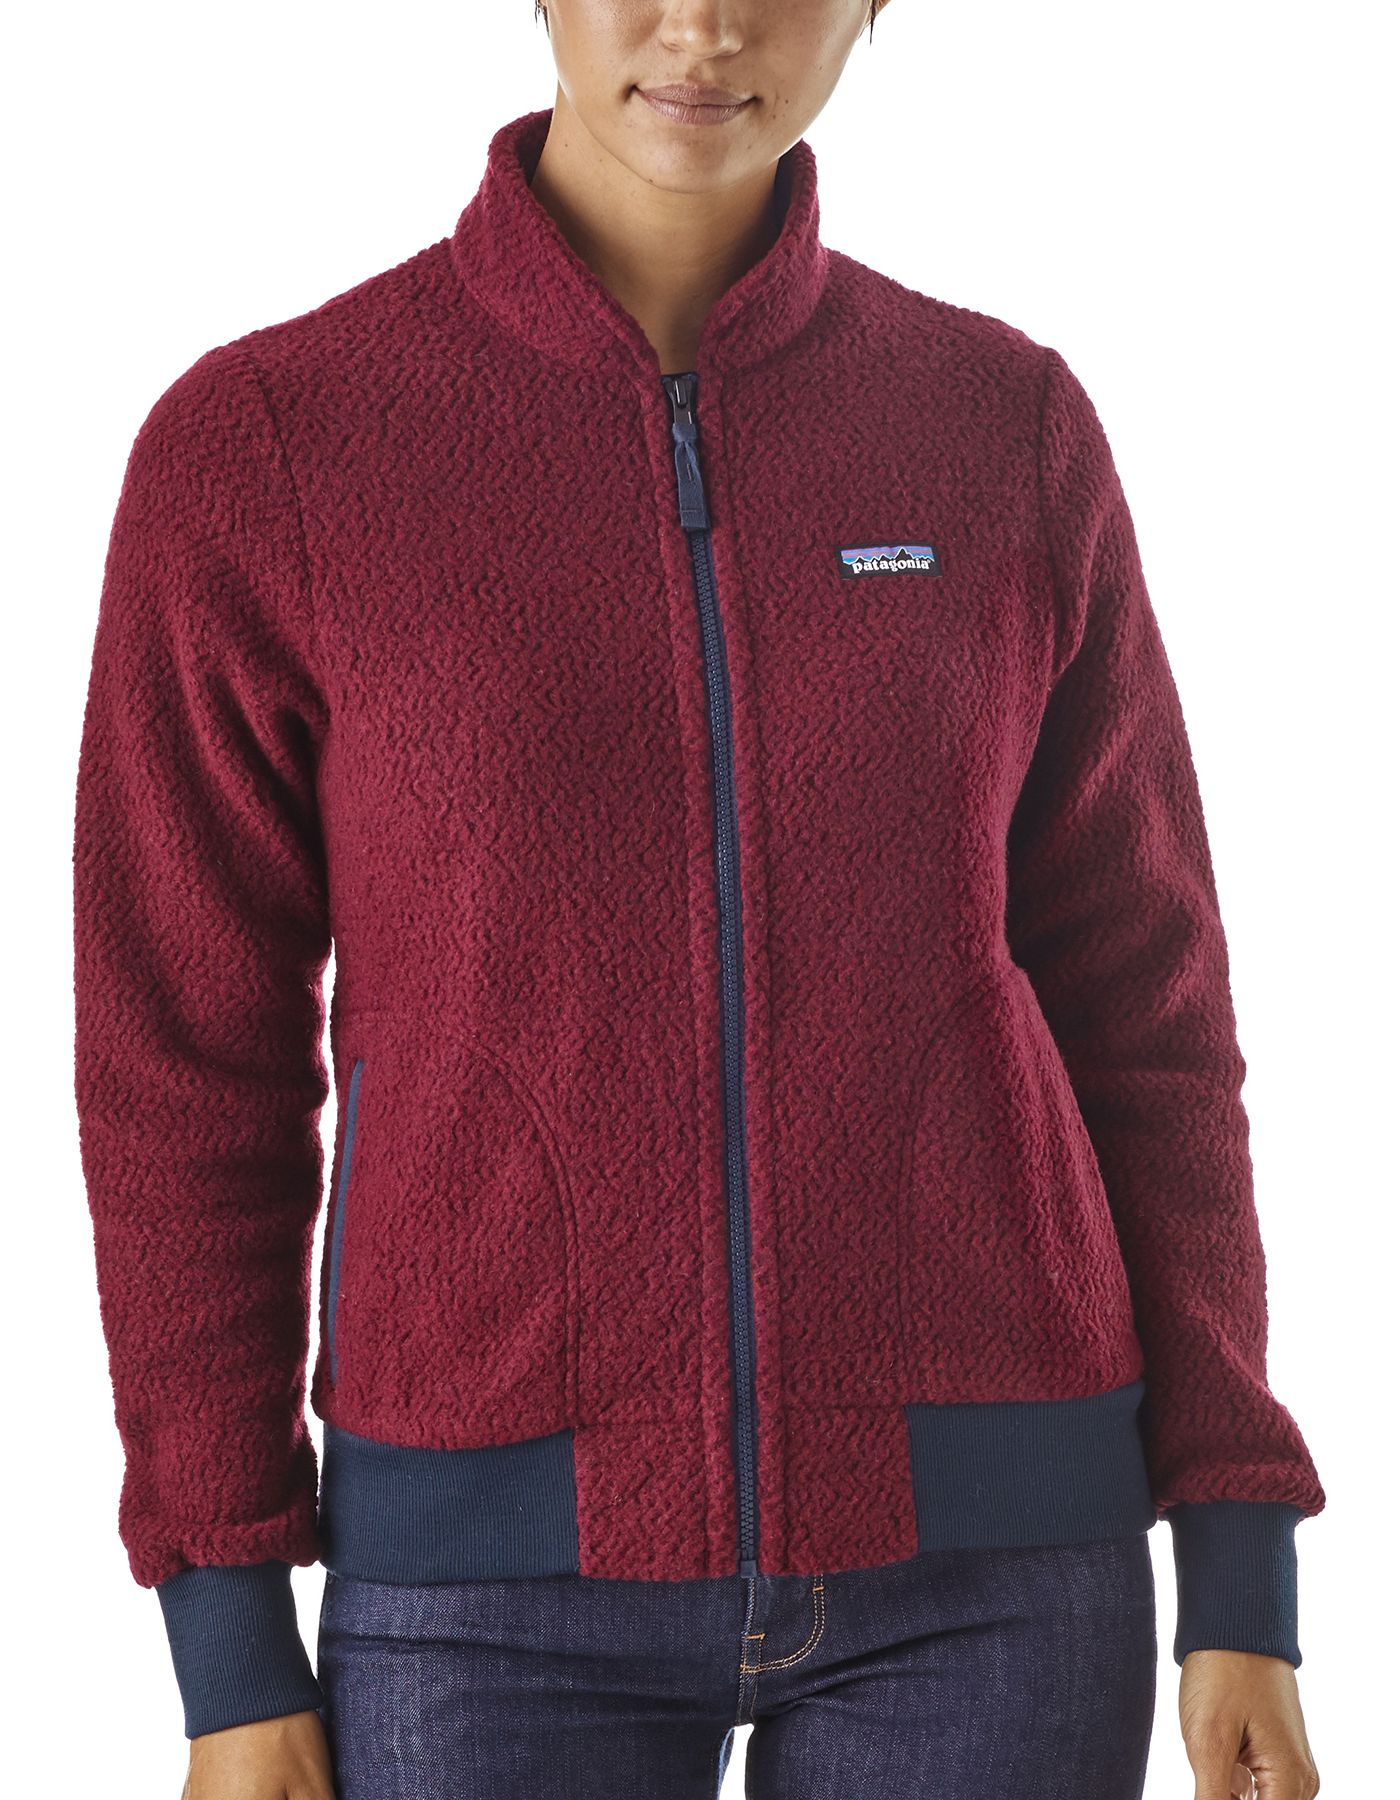 Patagonia Women s Woolyester Fleece  Jacket  DICK S 